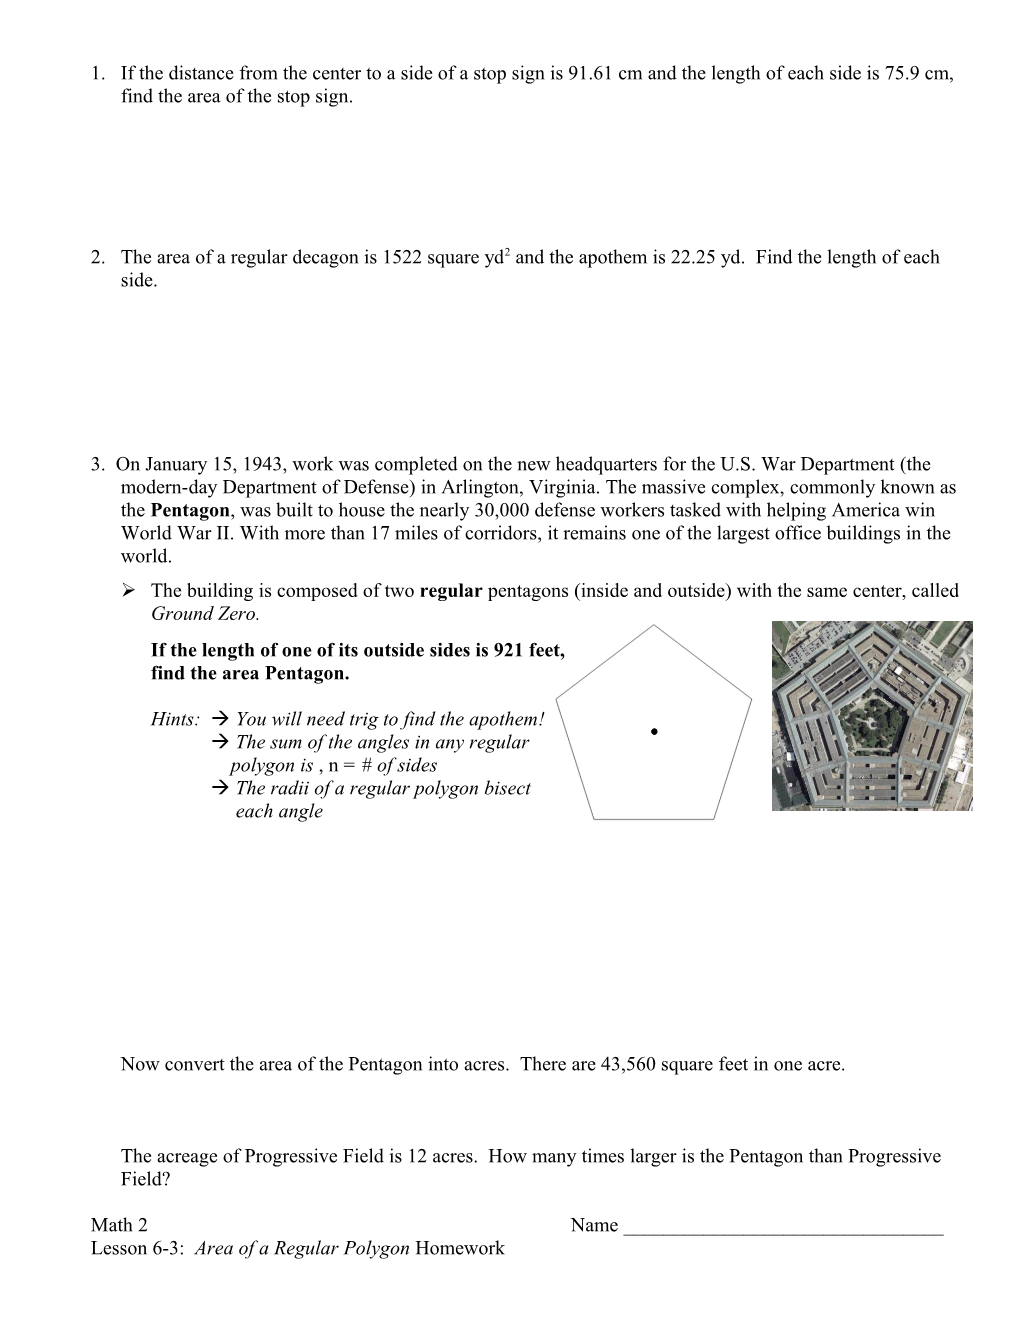 Lesson 6-3: Area of a Regular Polygon